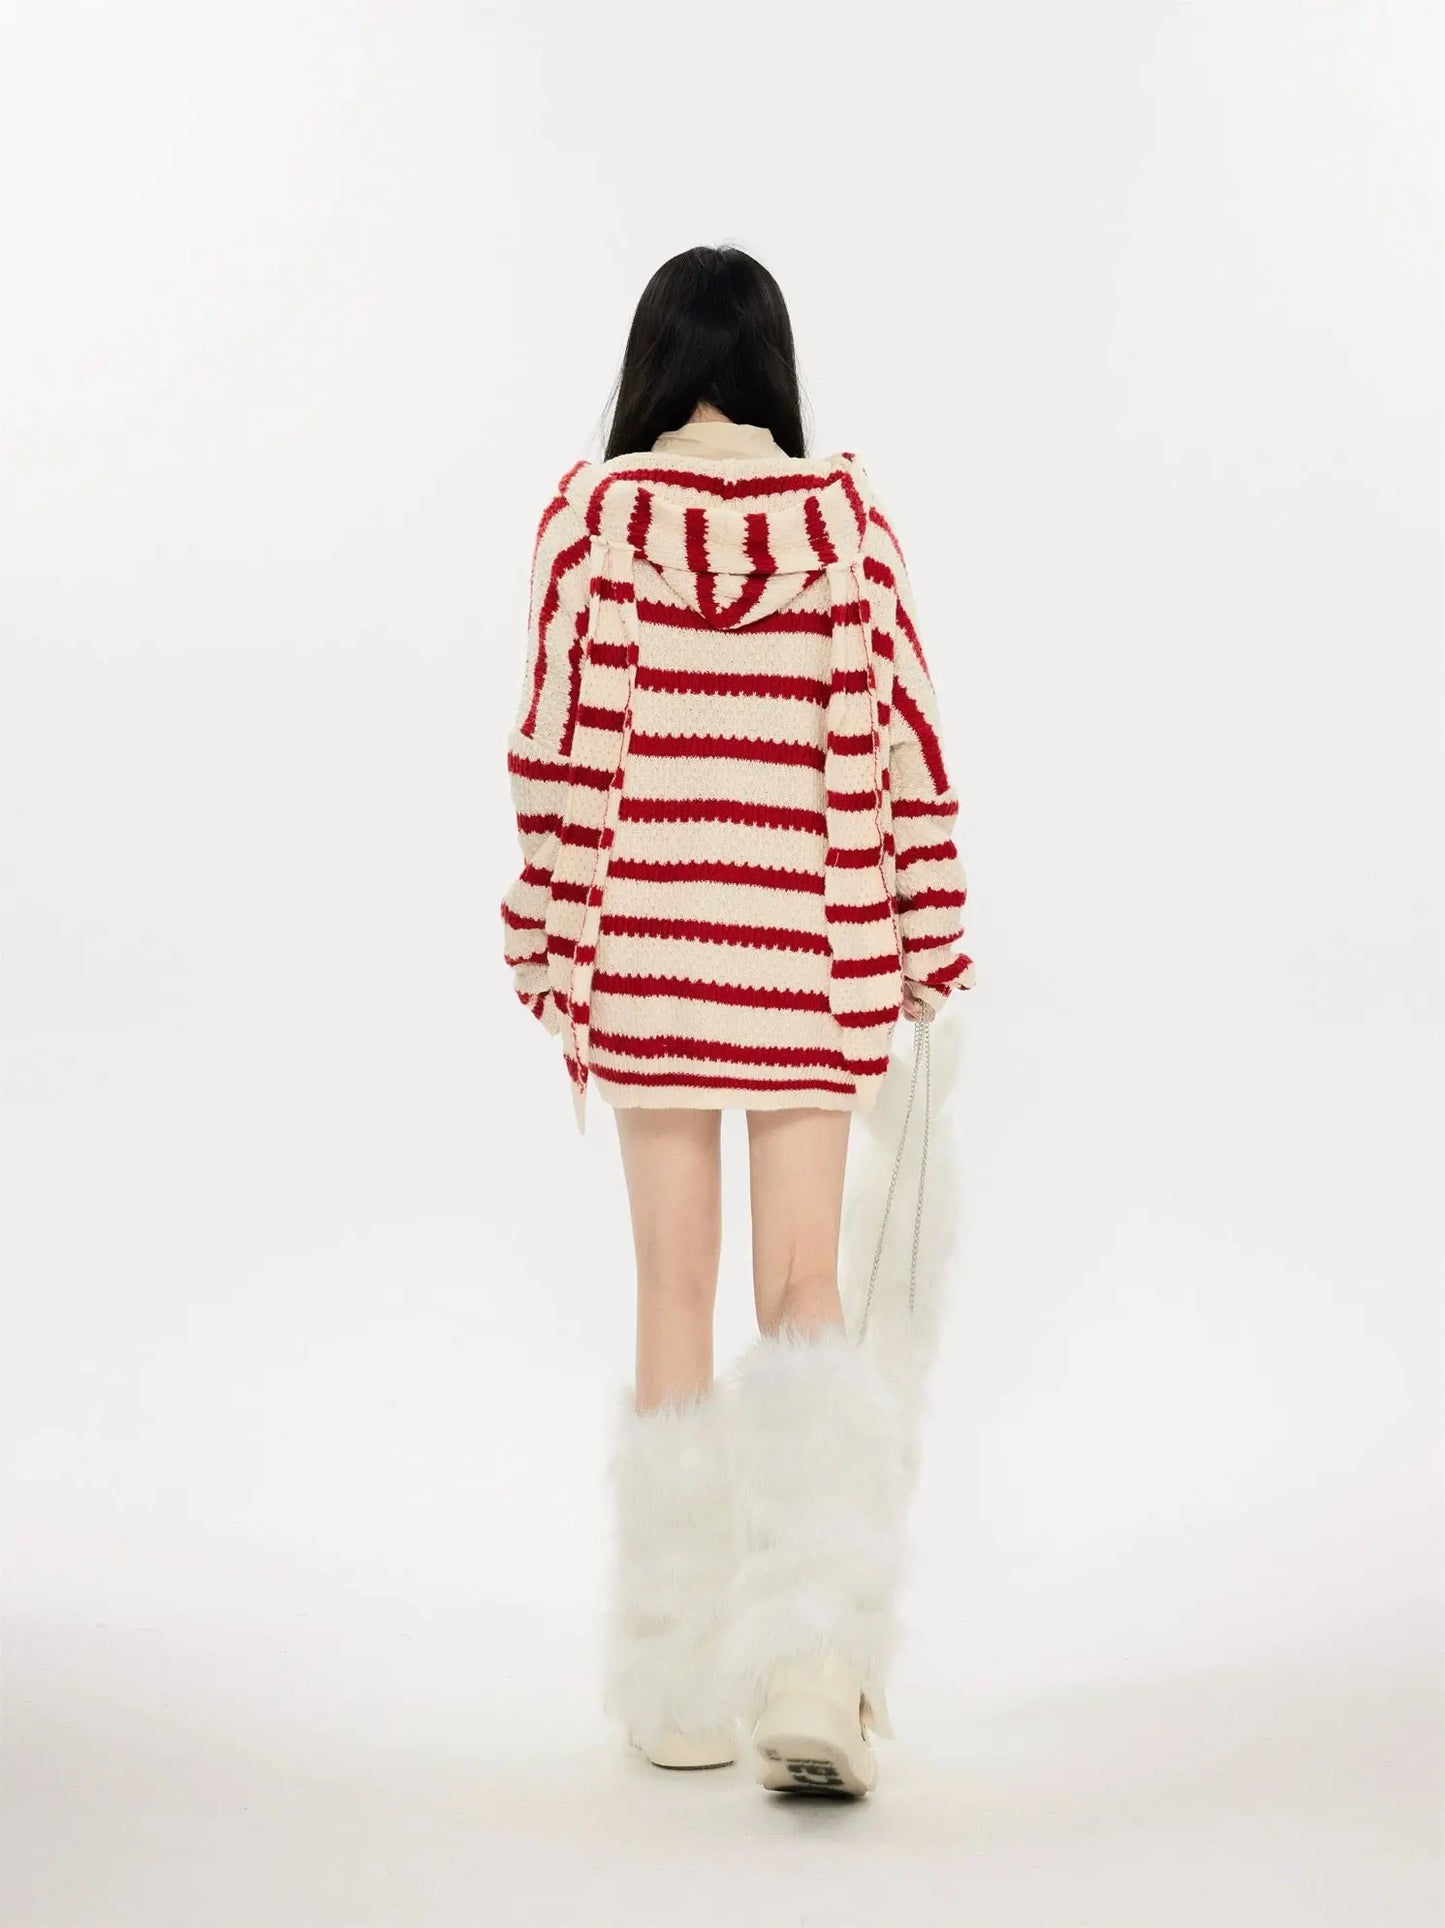 'Bunny Ear' Eetro Striped Hooded Knitted Sweater AlielNosirrah